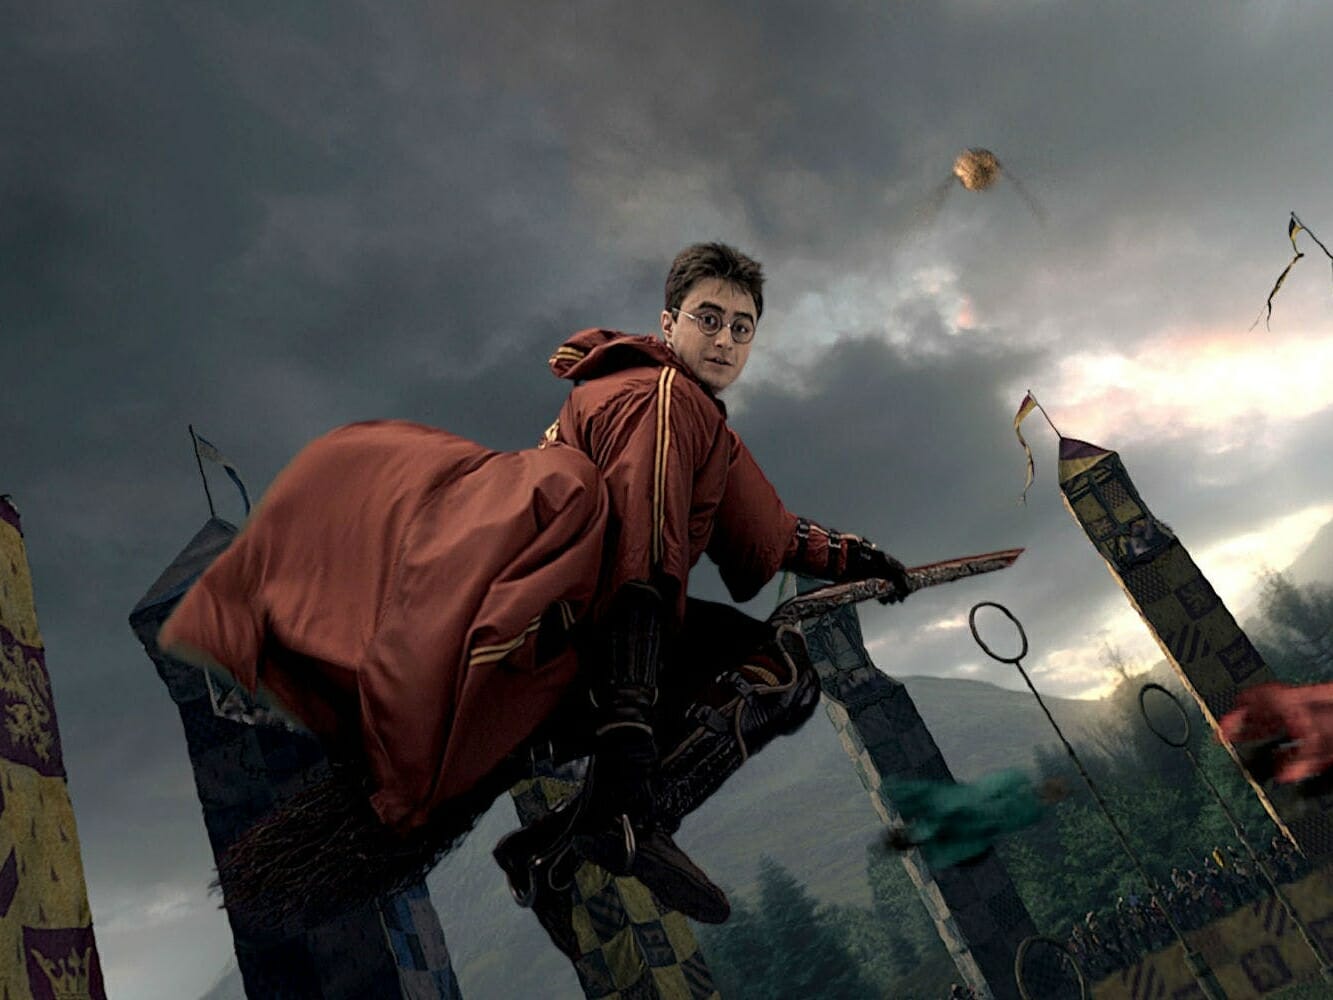 Animais Fantásticos 3 terá volta do objeto mágico favorito de Harry Potter